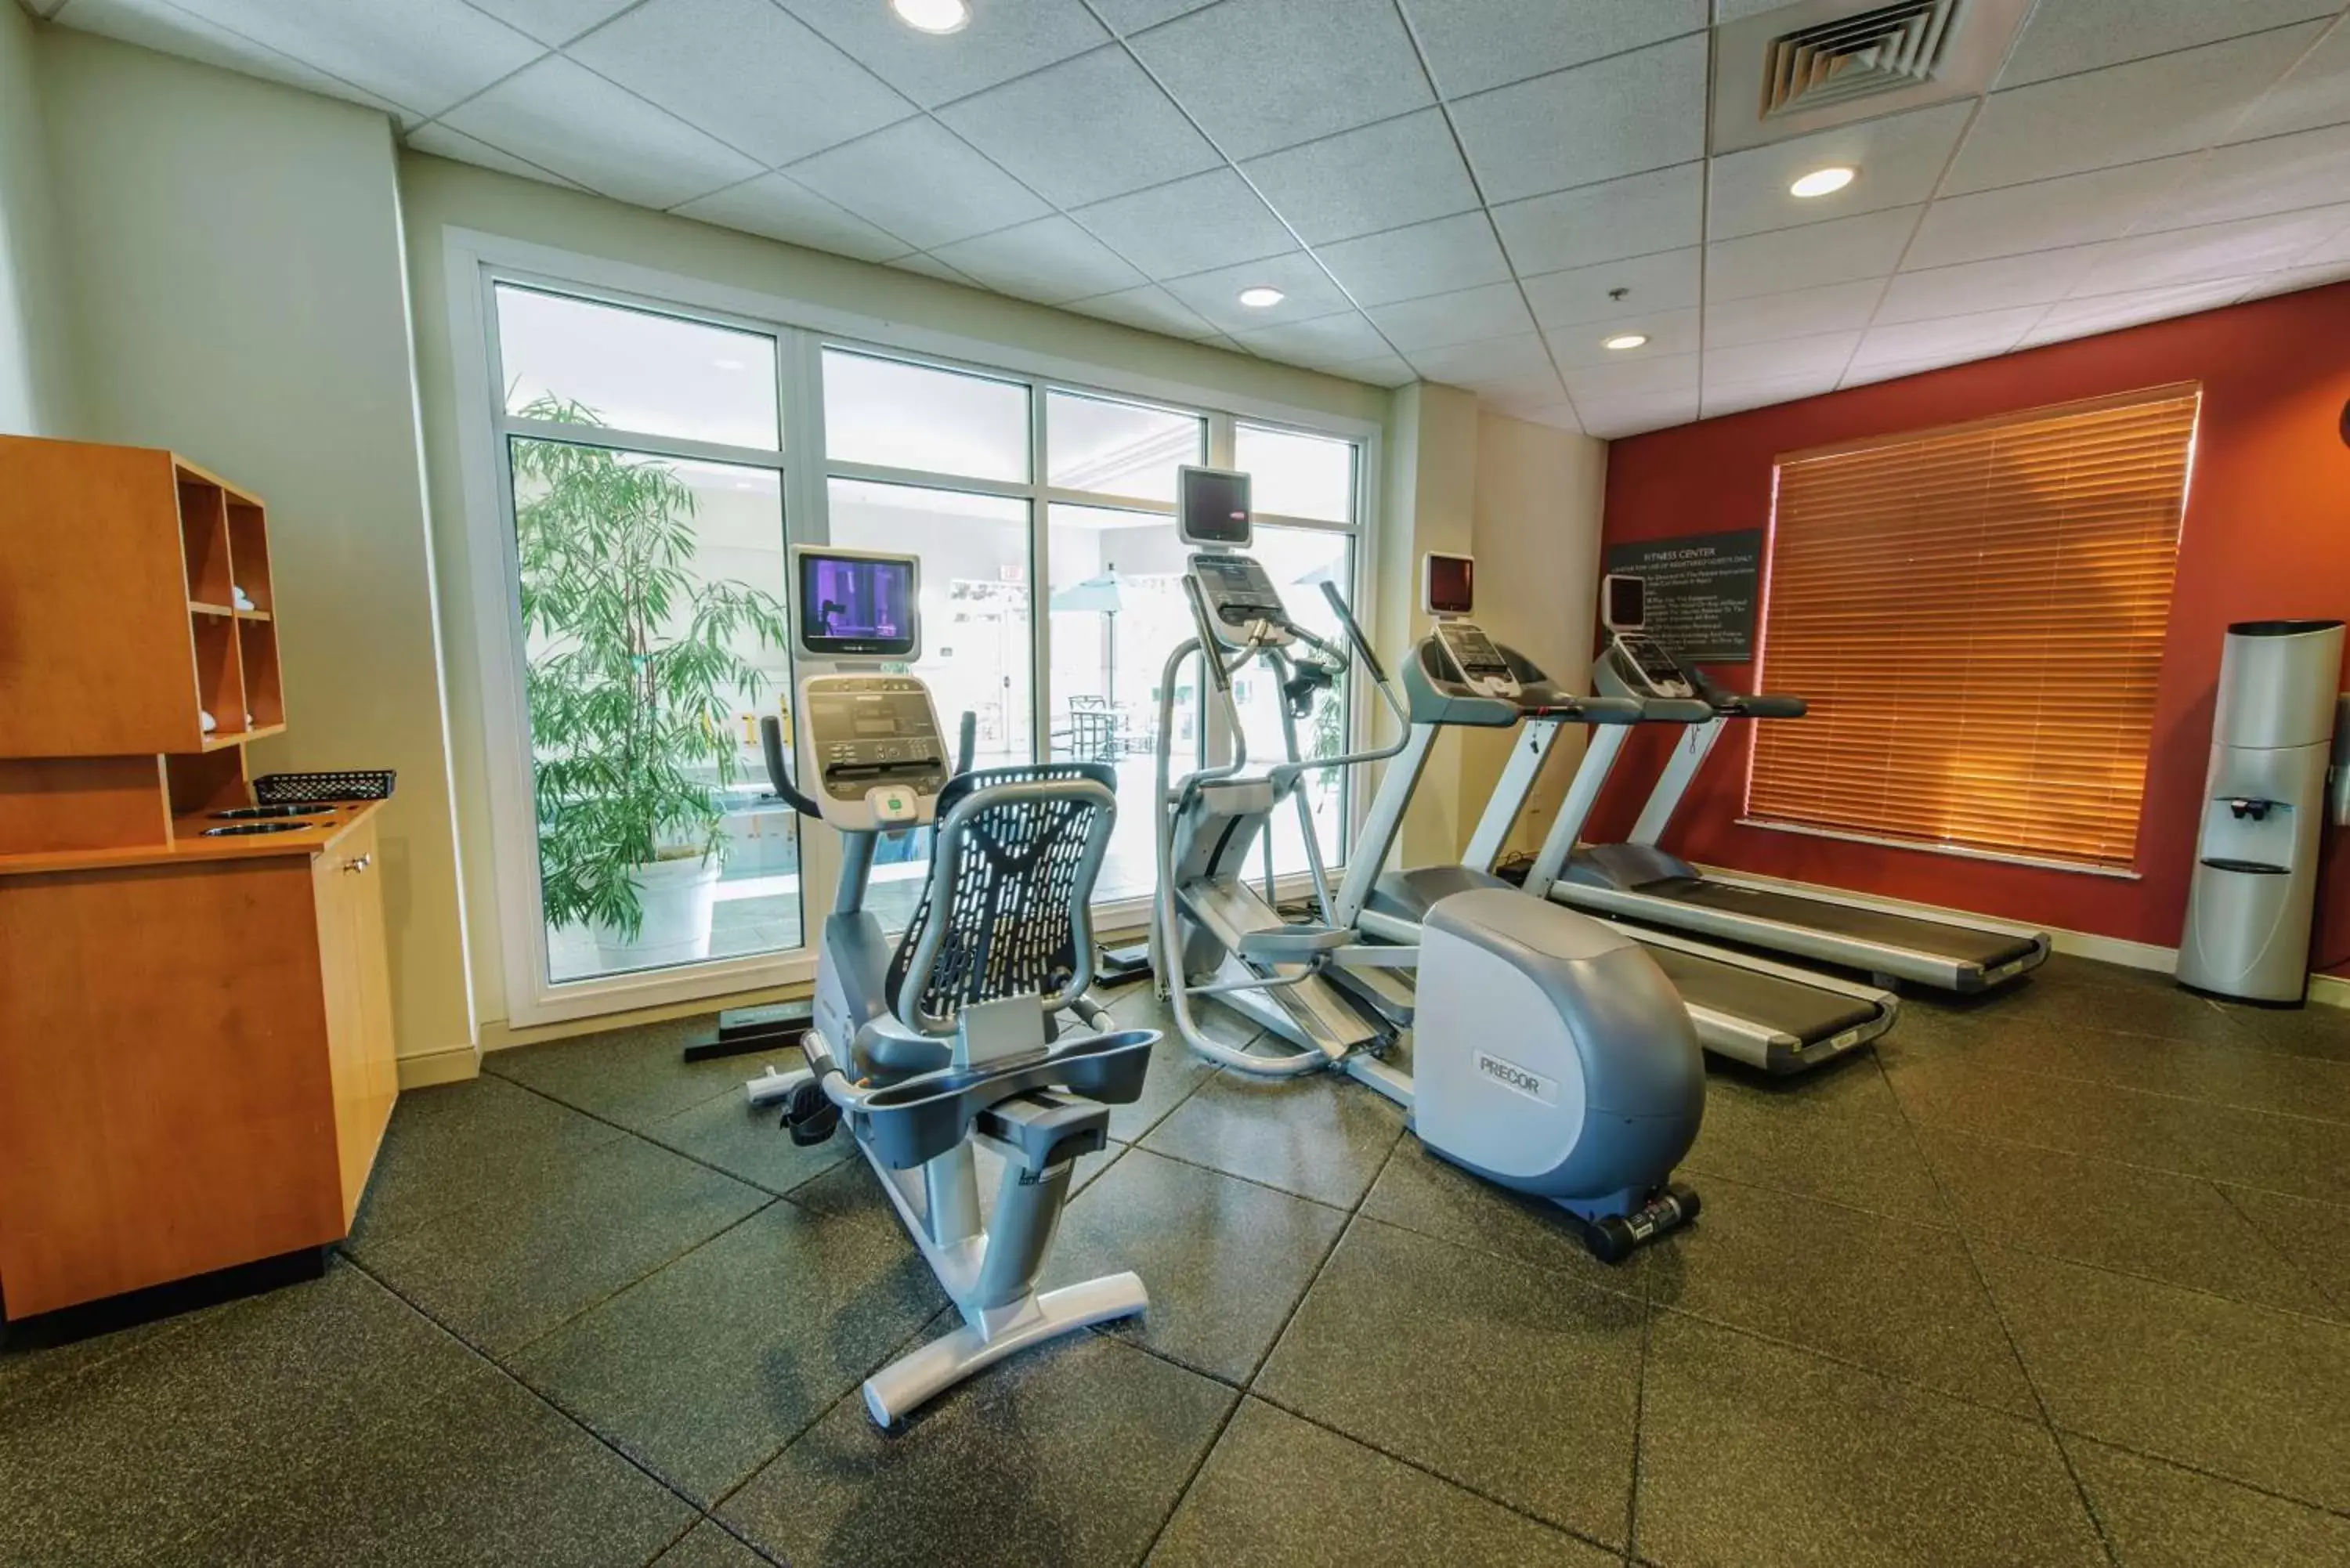 Fitness centre/facilities, Fitness Center/Facilities in Hilton Garden Inn Manchester Downtown